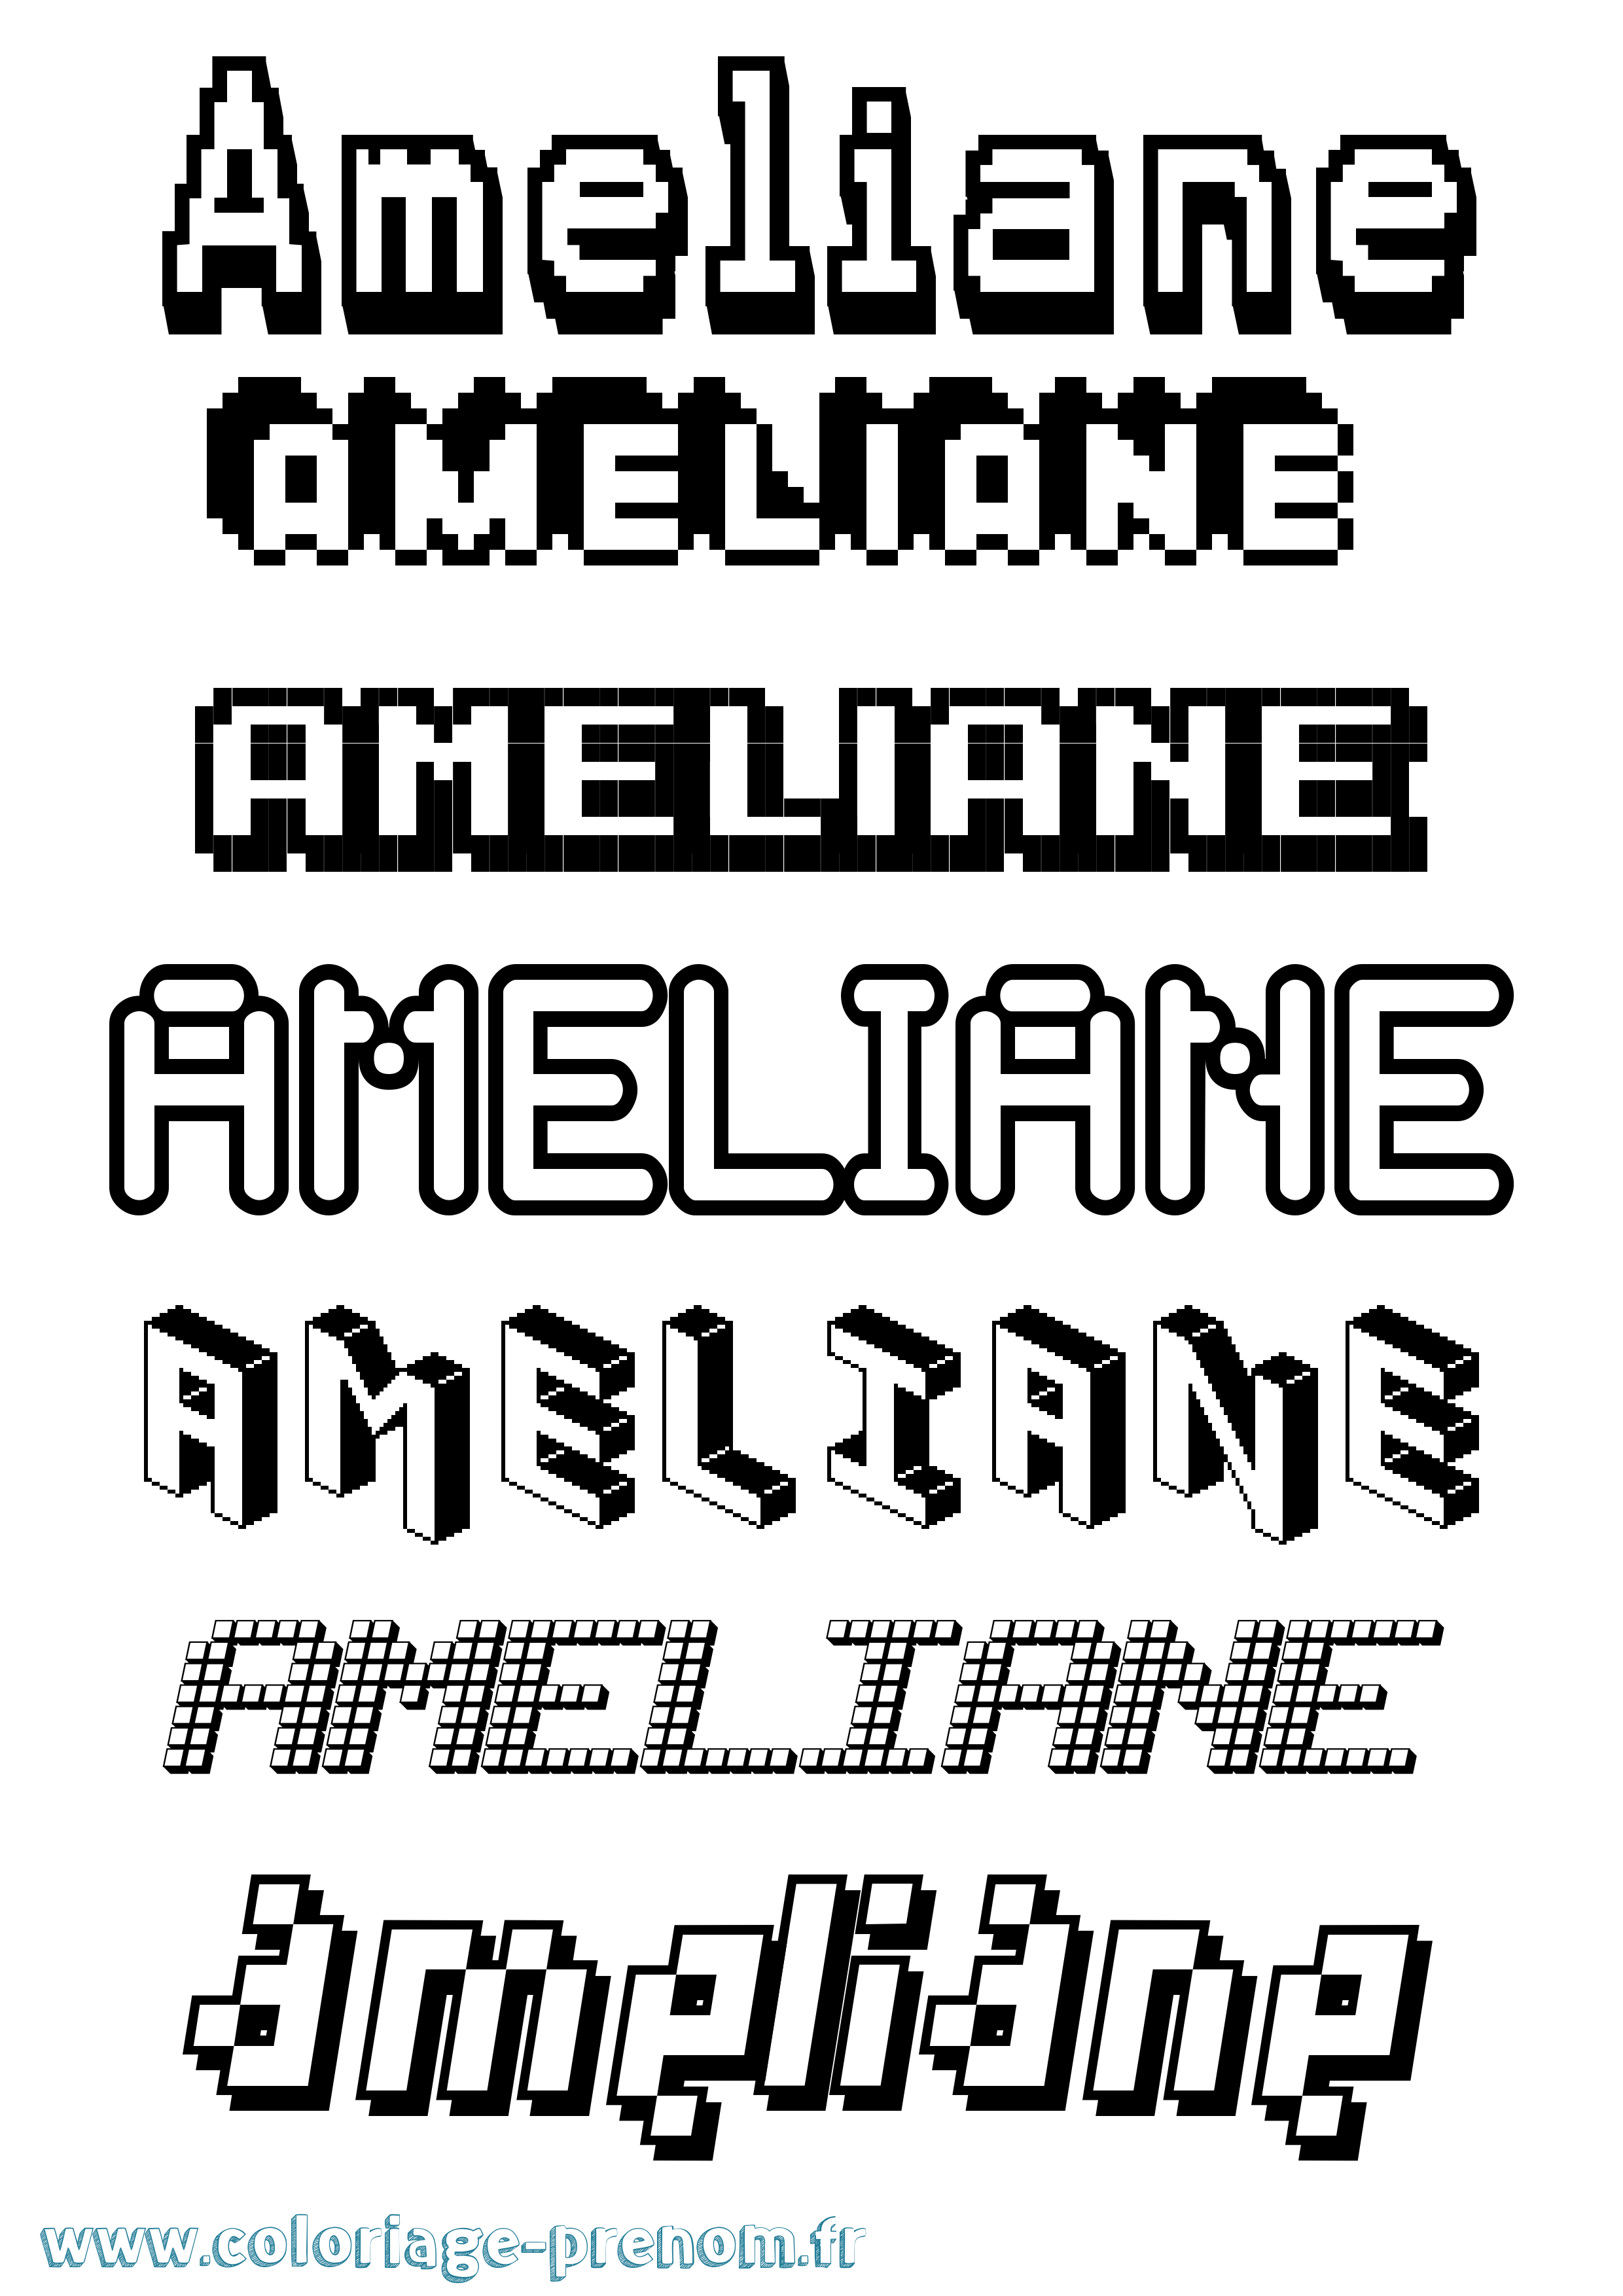 Coloriage prénom Ameliane Pixel